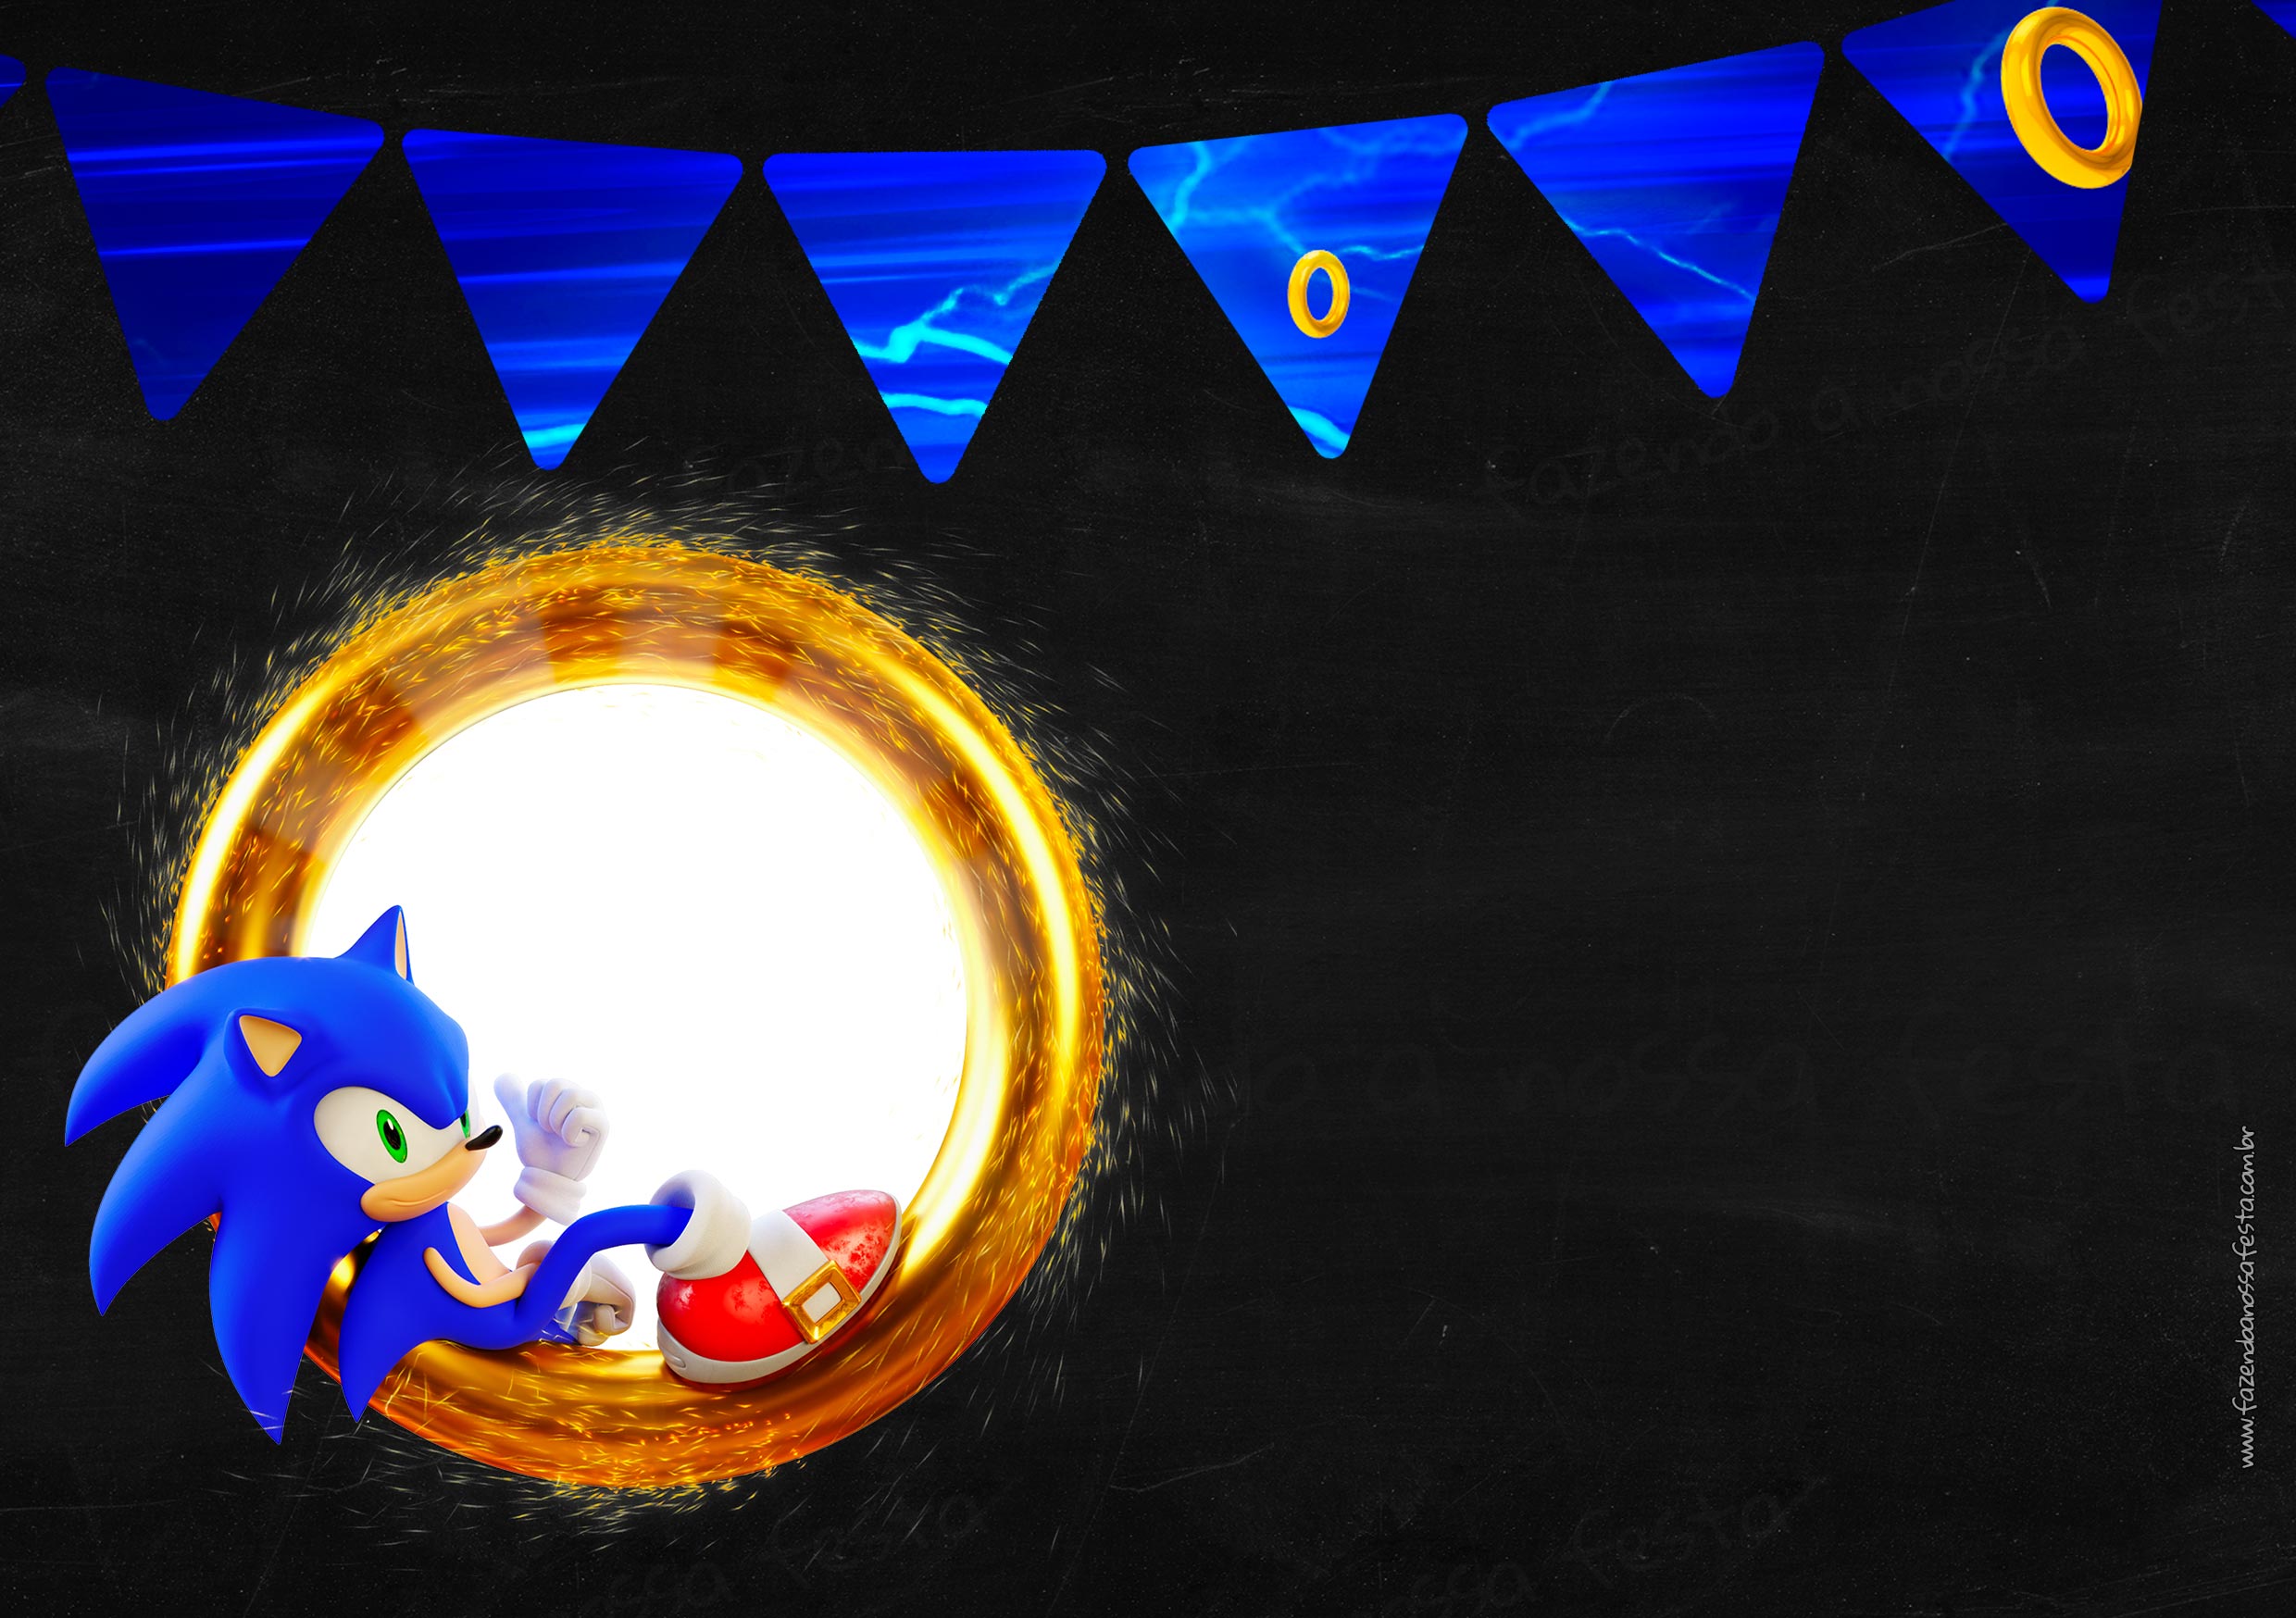 Convite Sonic editavel - Fazendo a Nossa Festa